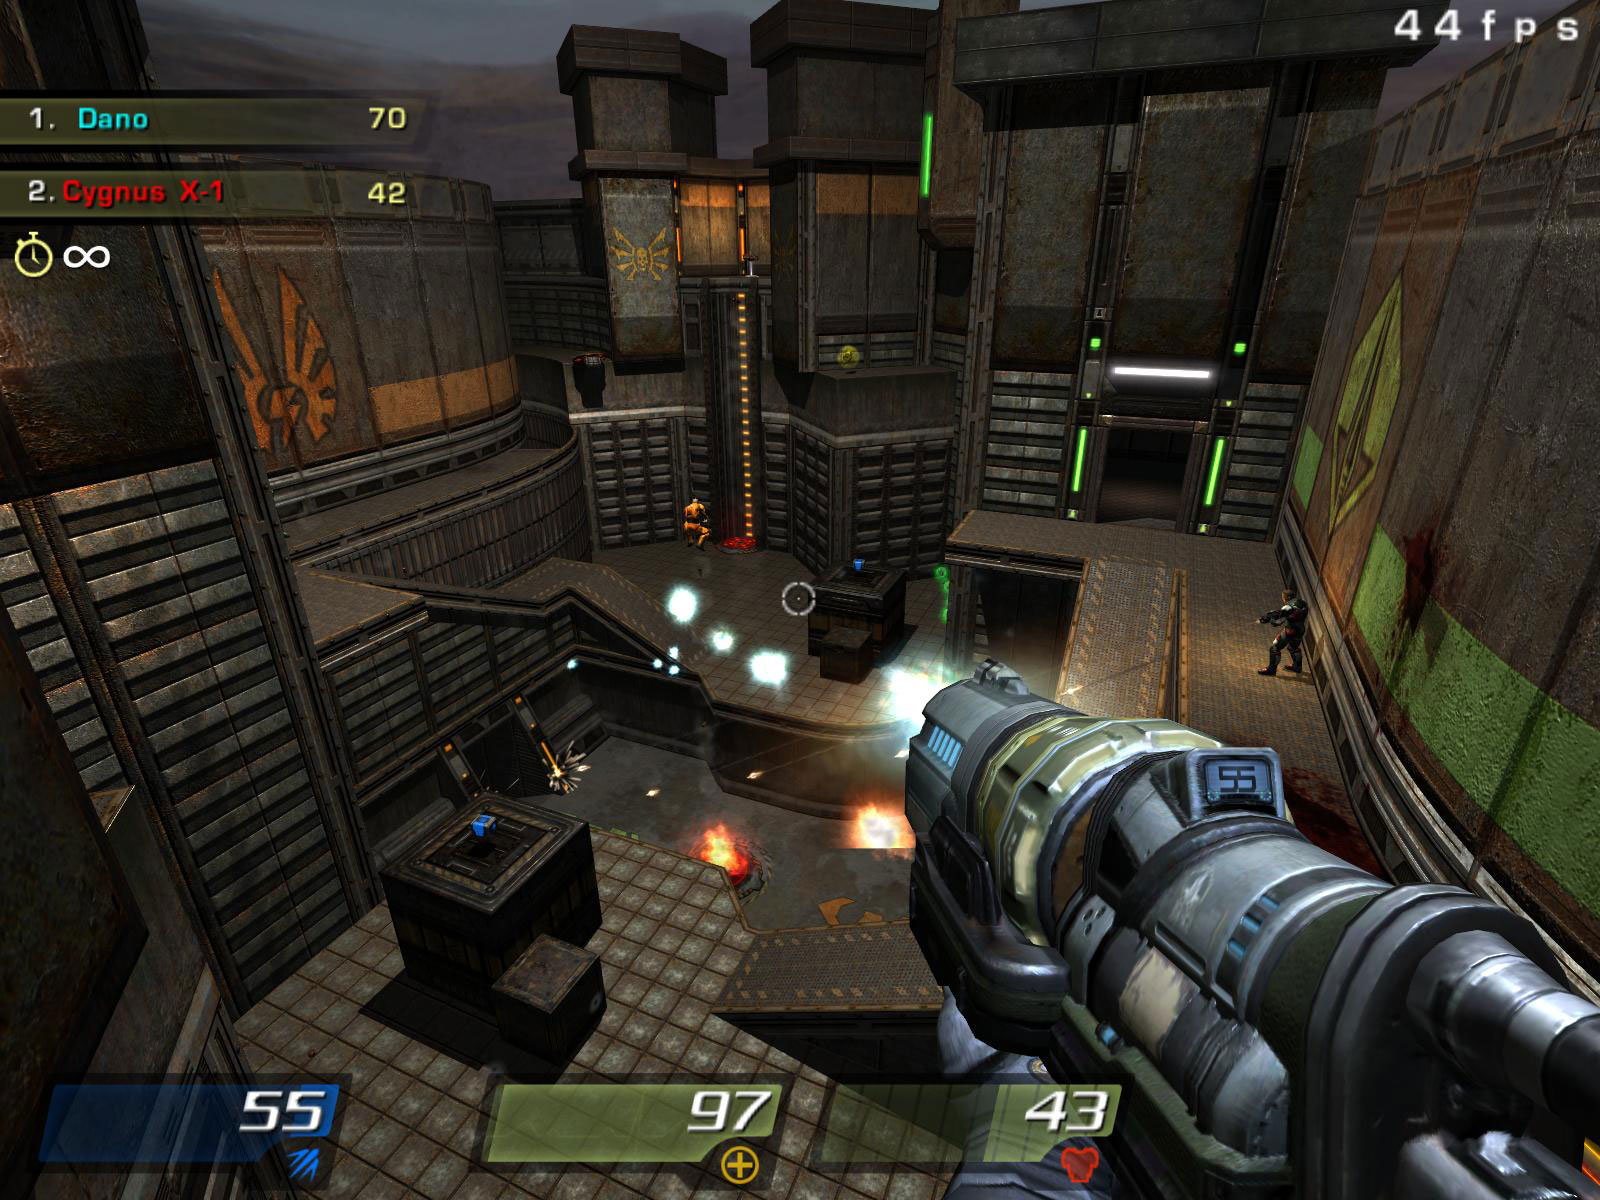 Alien Shooter II: PC Game Full Version Free Download